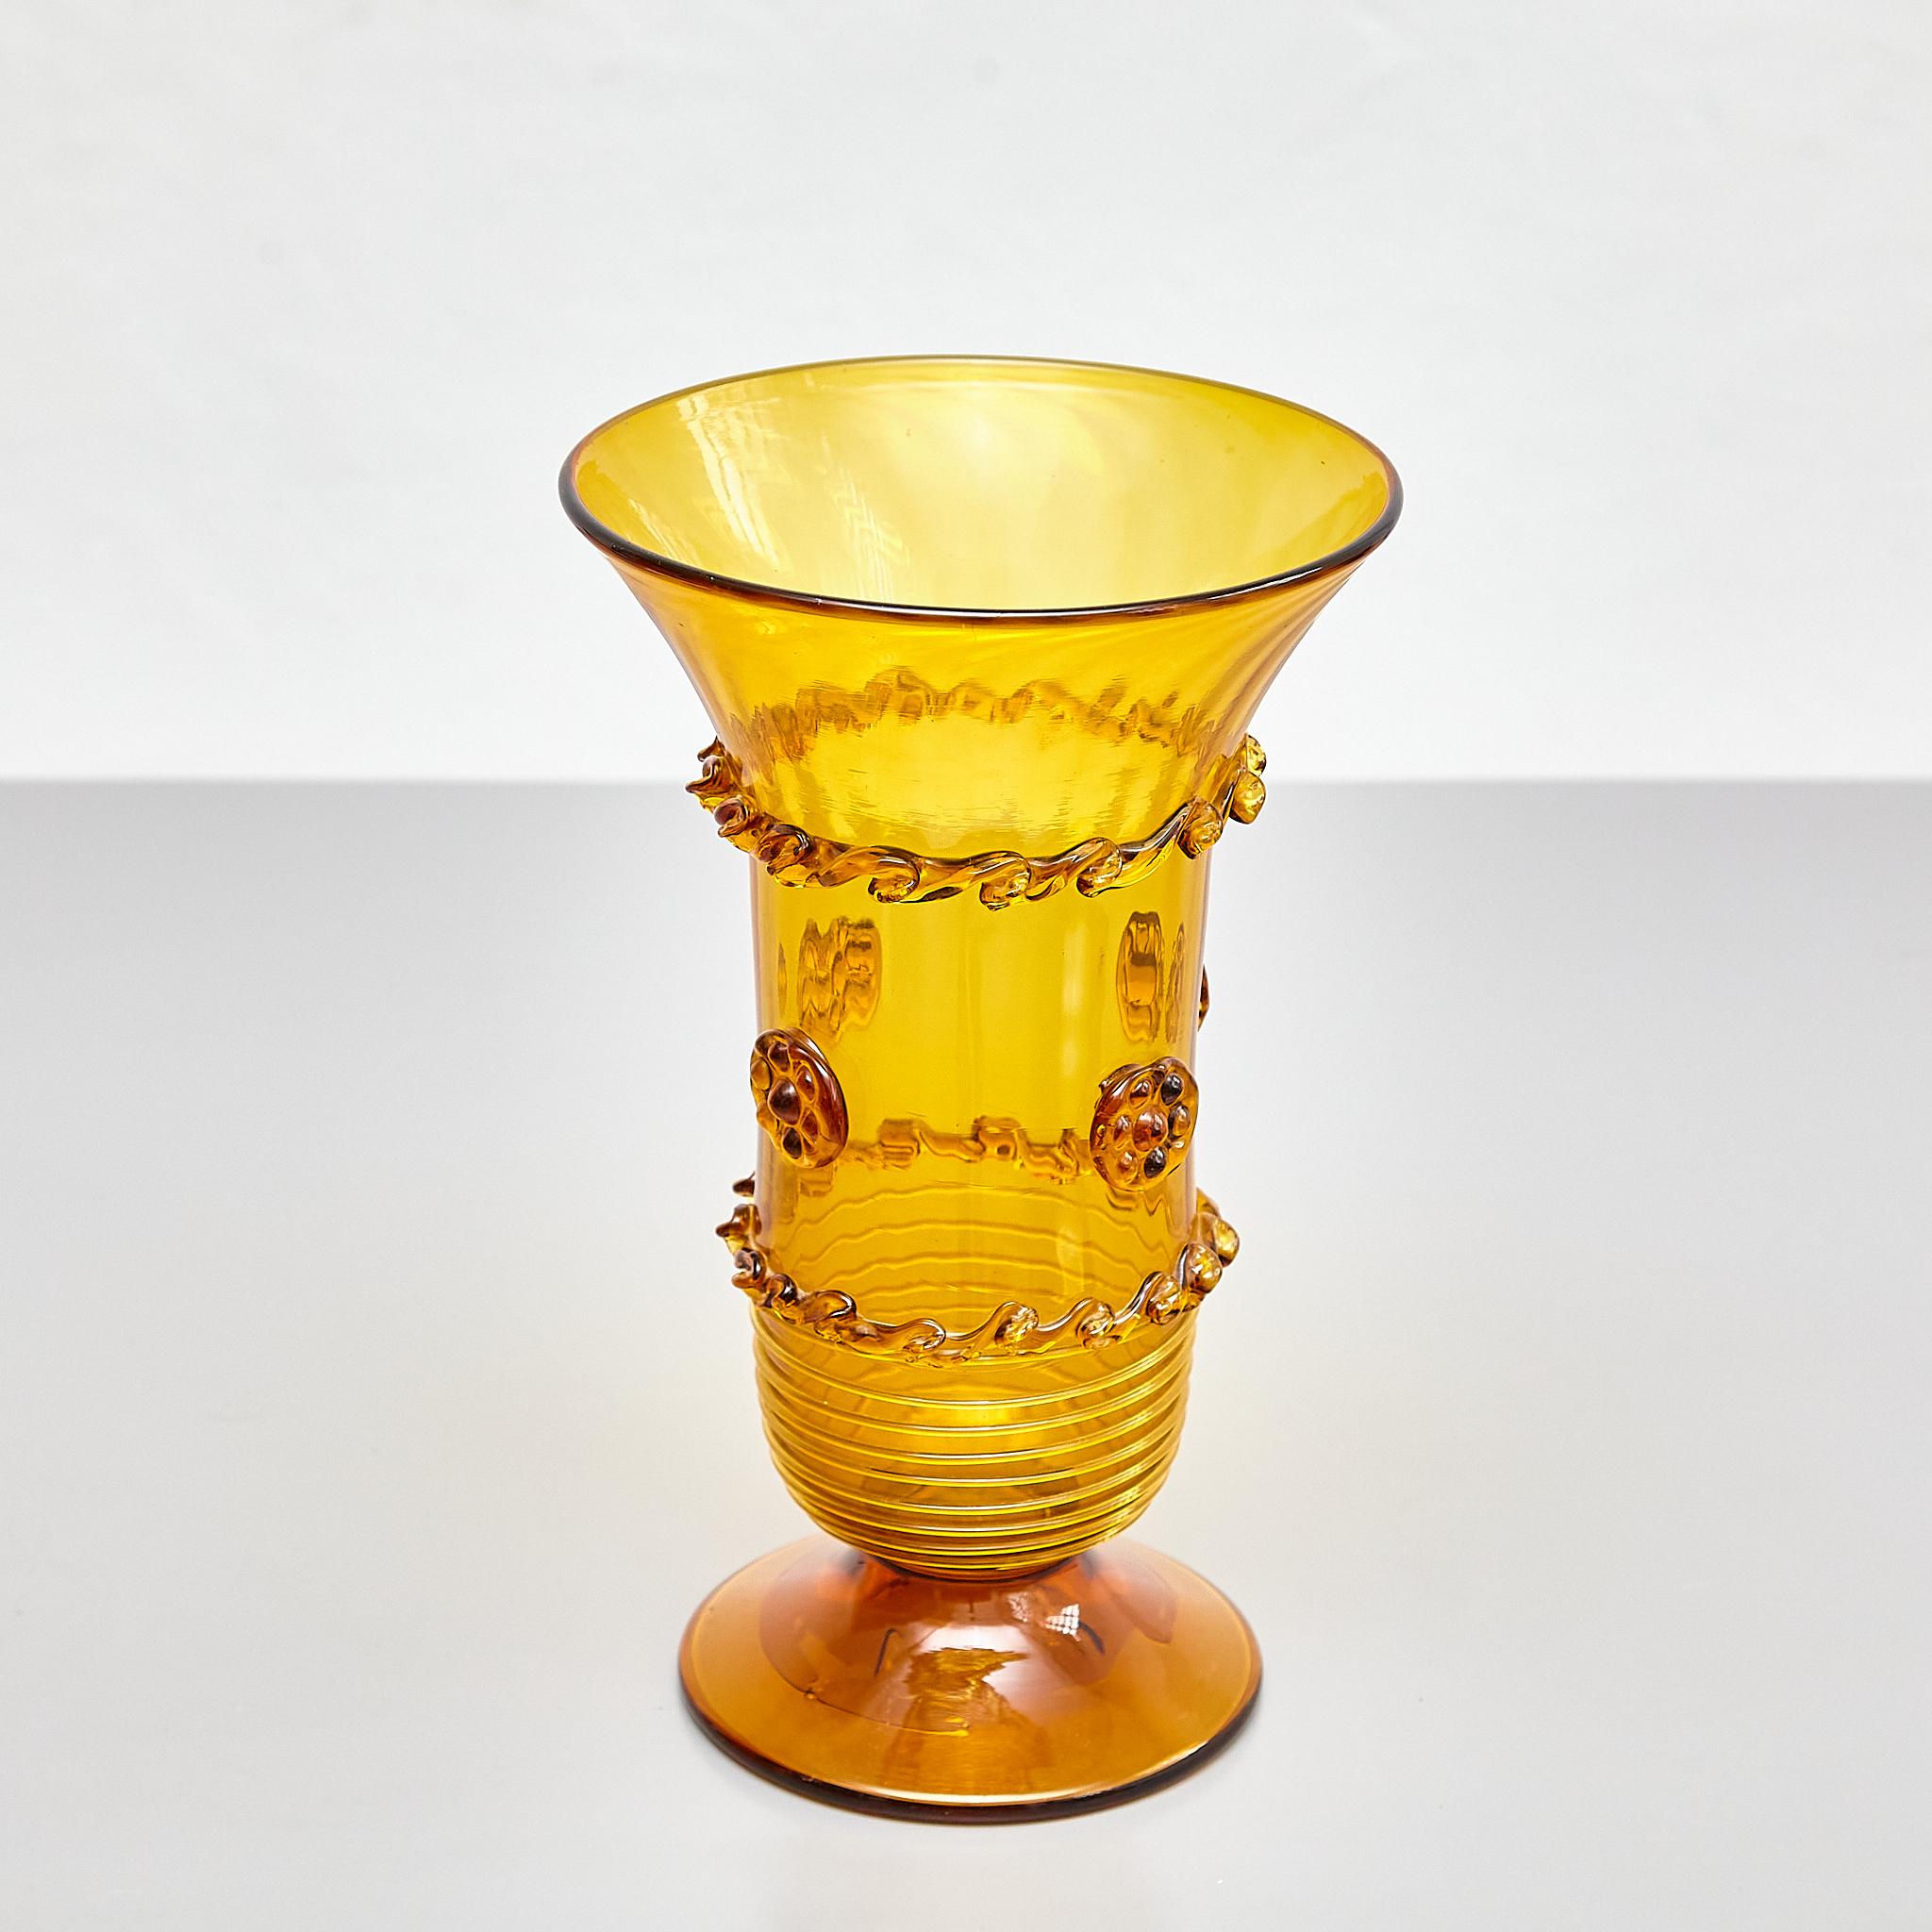 Rustic Elegant Amber Blown Glass Vase - Early 20th Century Spanish Artistry